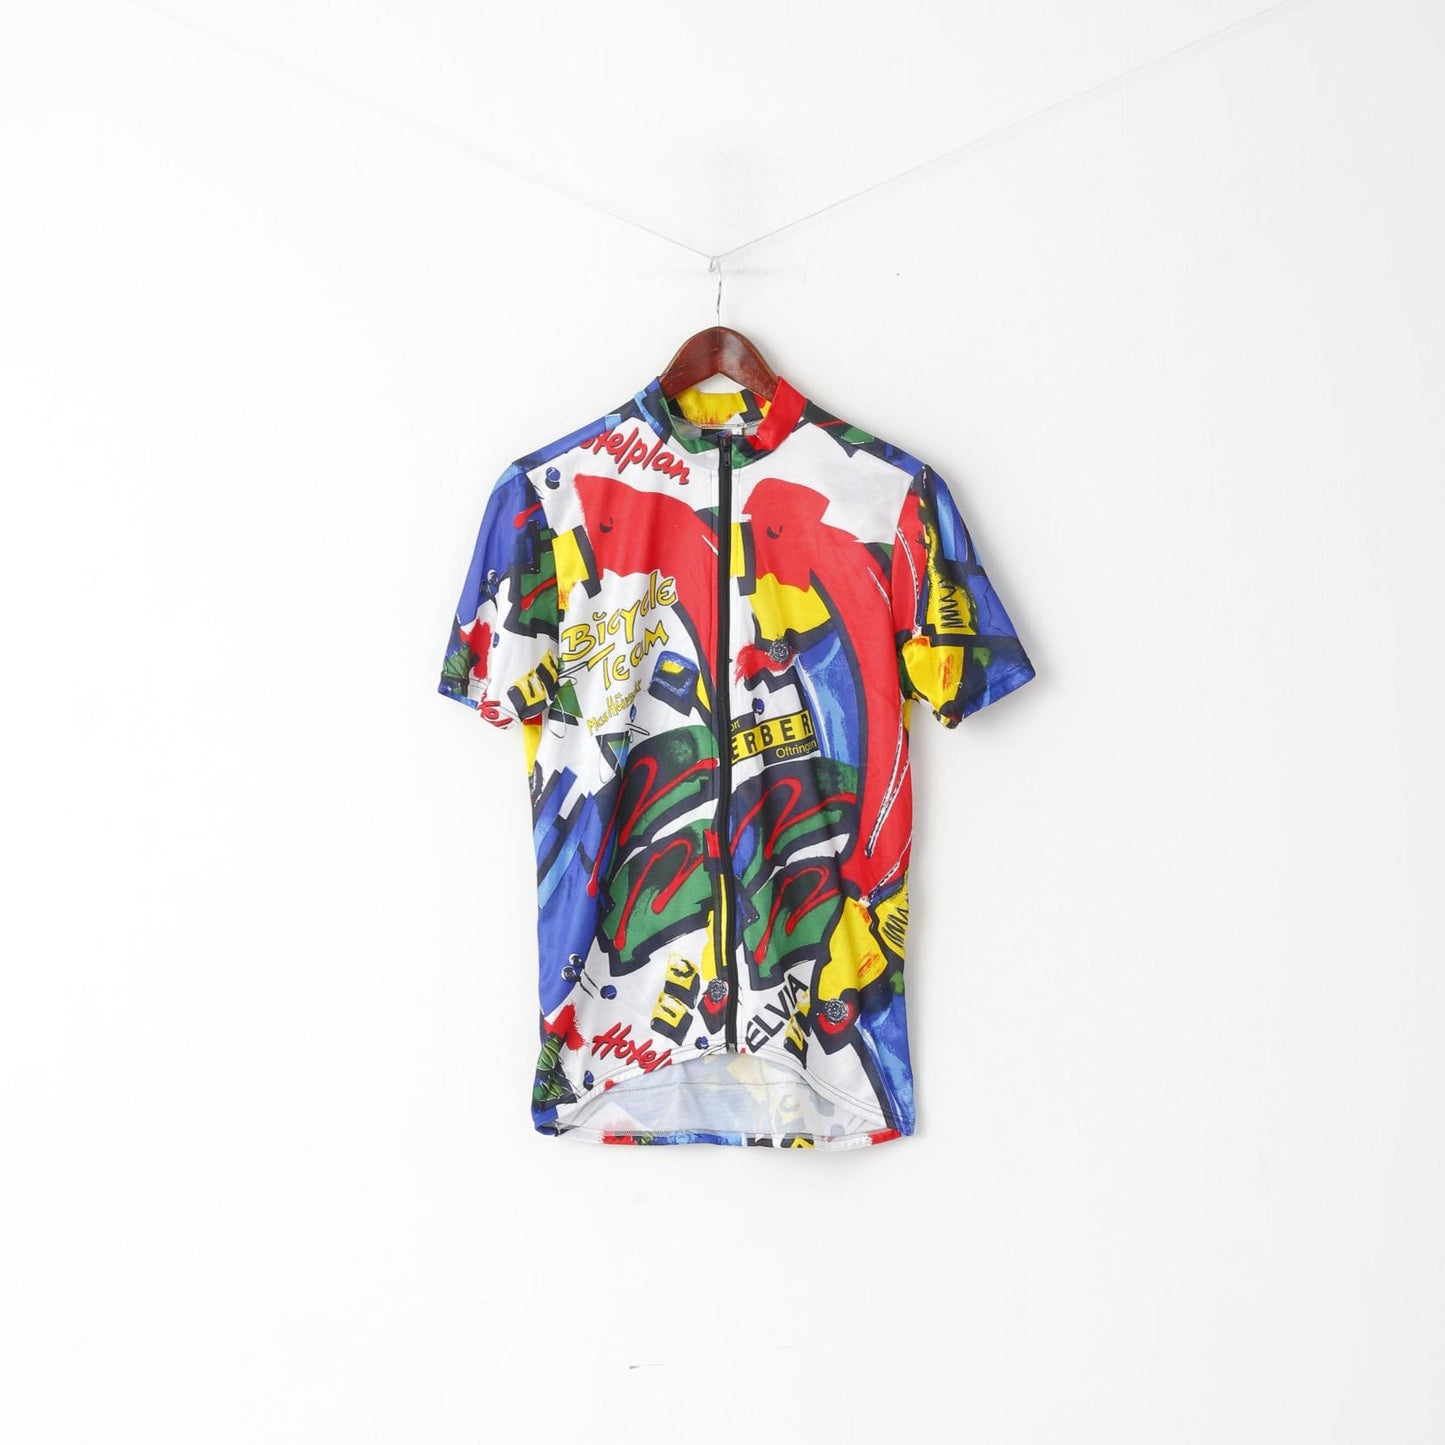 Swiss Bicycle Team Max Hurzeler Men L Cycling Shirt Multicolor Jersey Bike Full Zipper Top